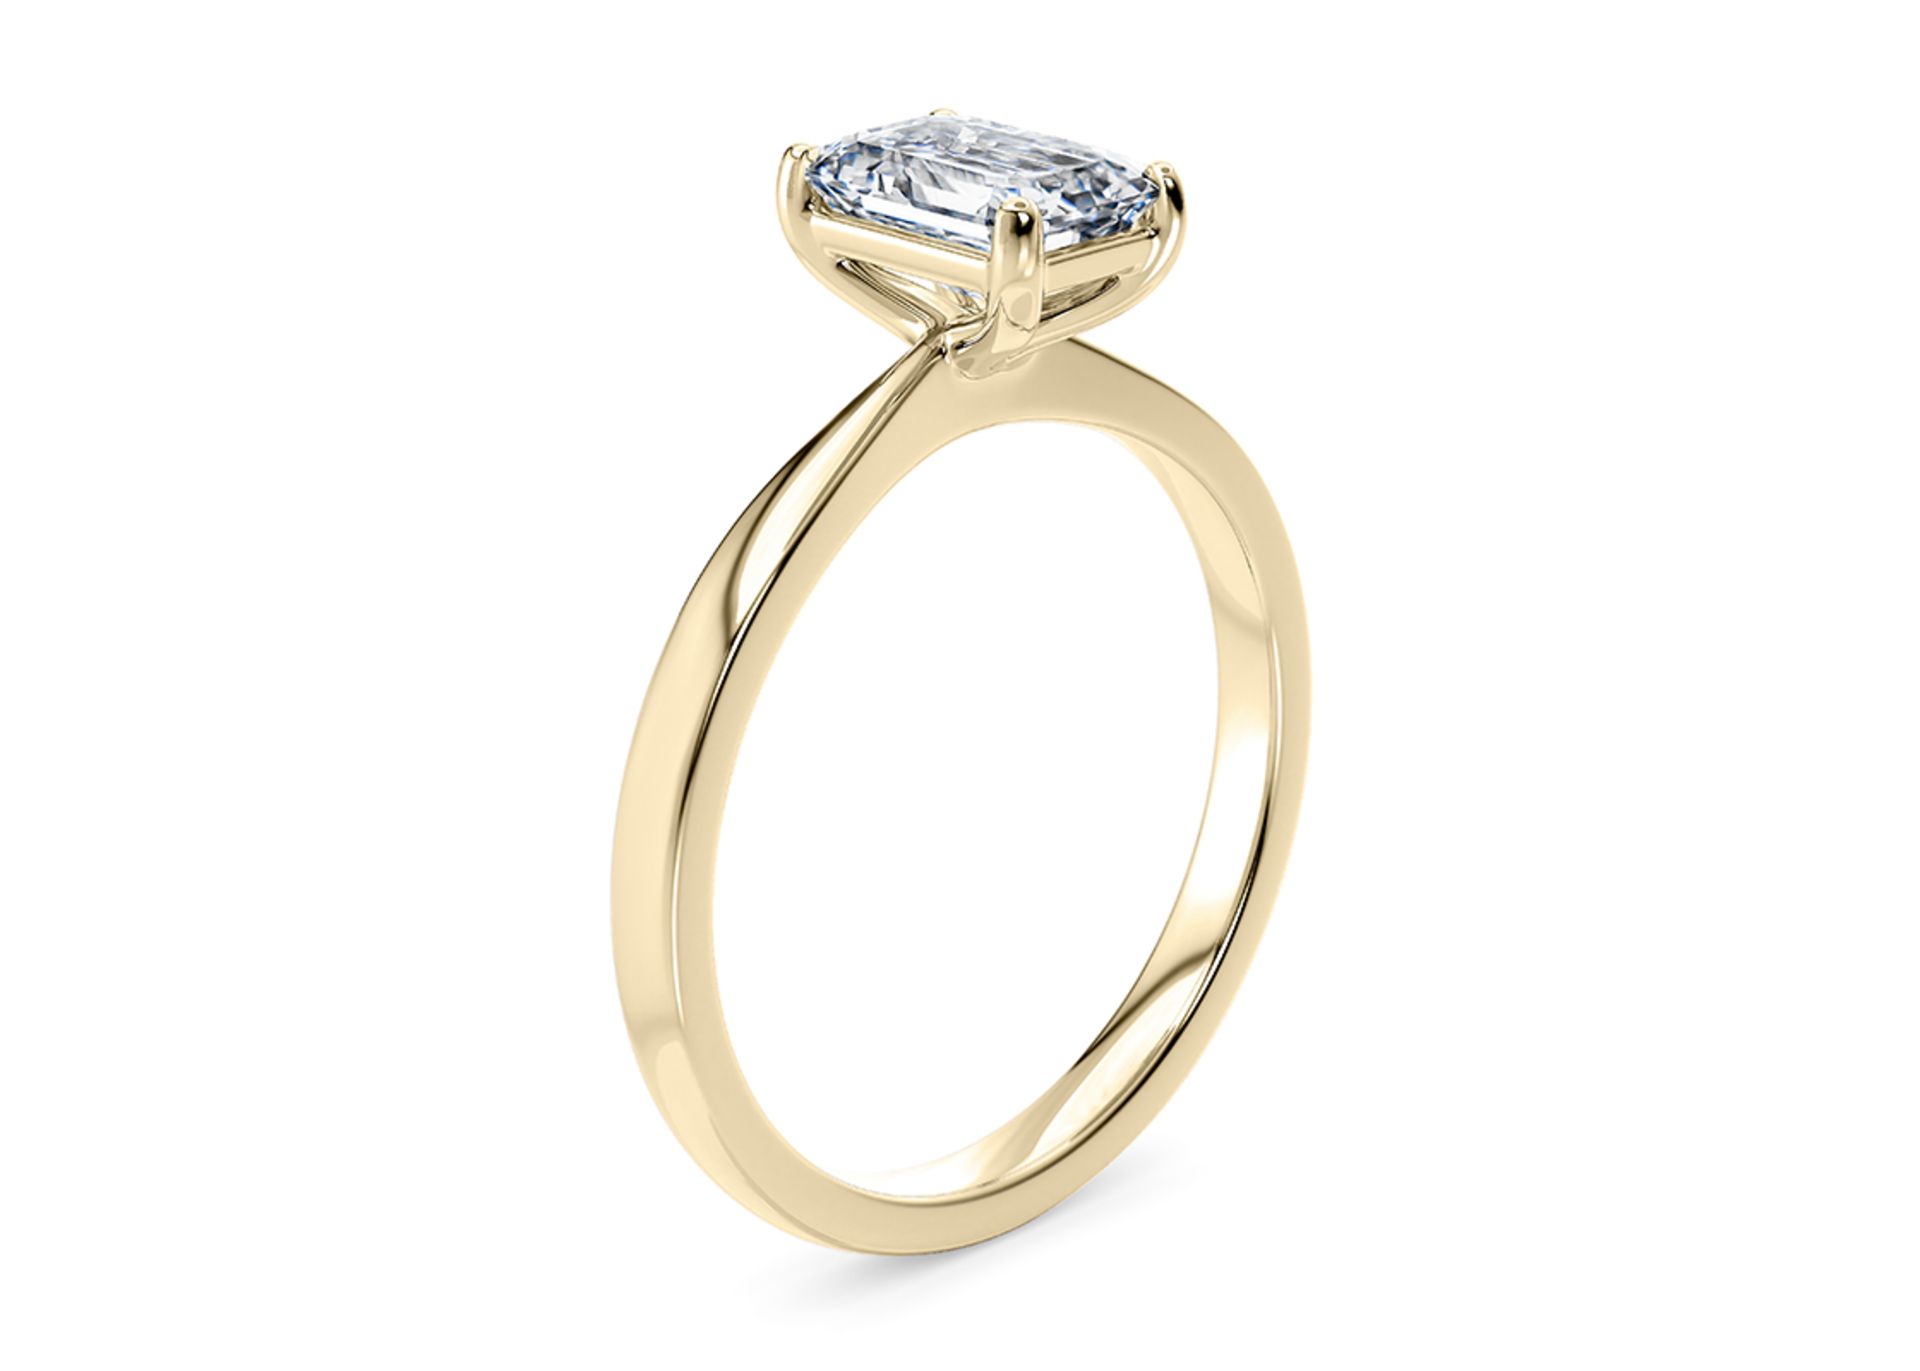 Emerald Cut Diamond 18kt Yellow Gold Ring 4.00 Carat D Colour VVS2 Clarity EX EX - IGI - Image 2 of 4